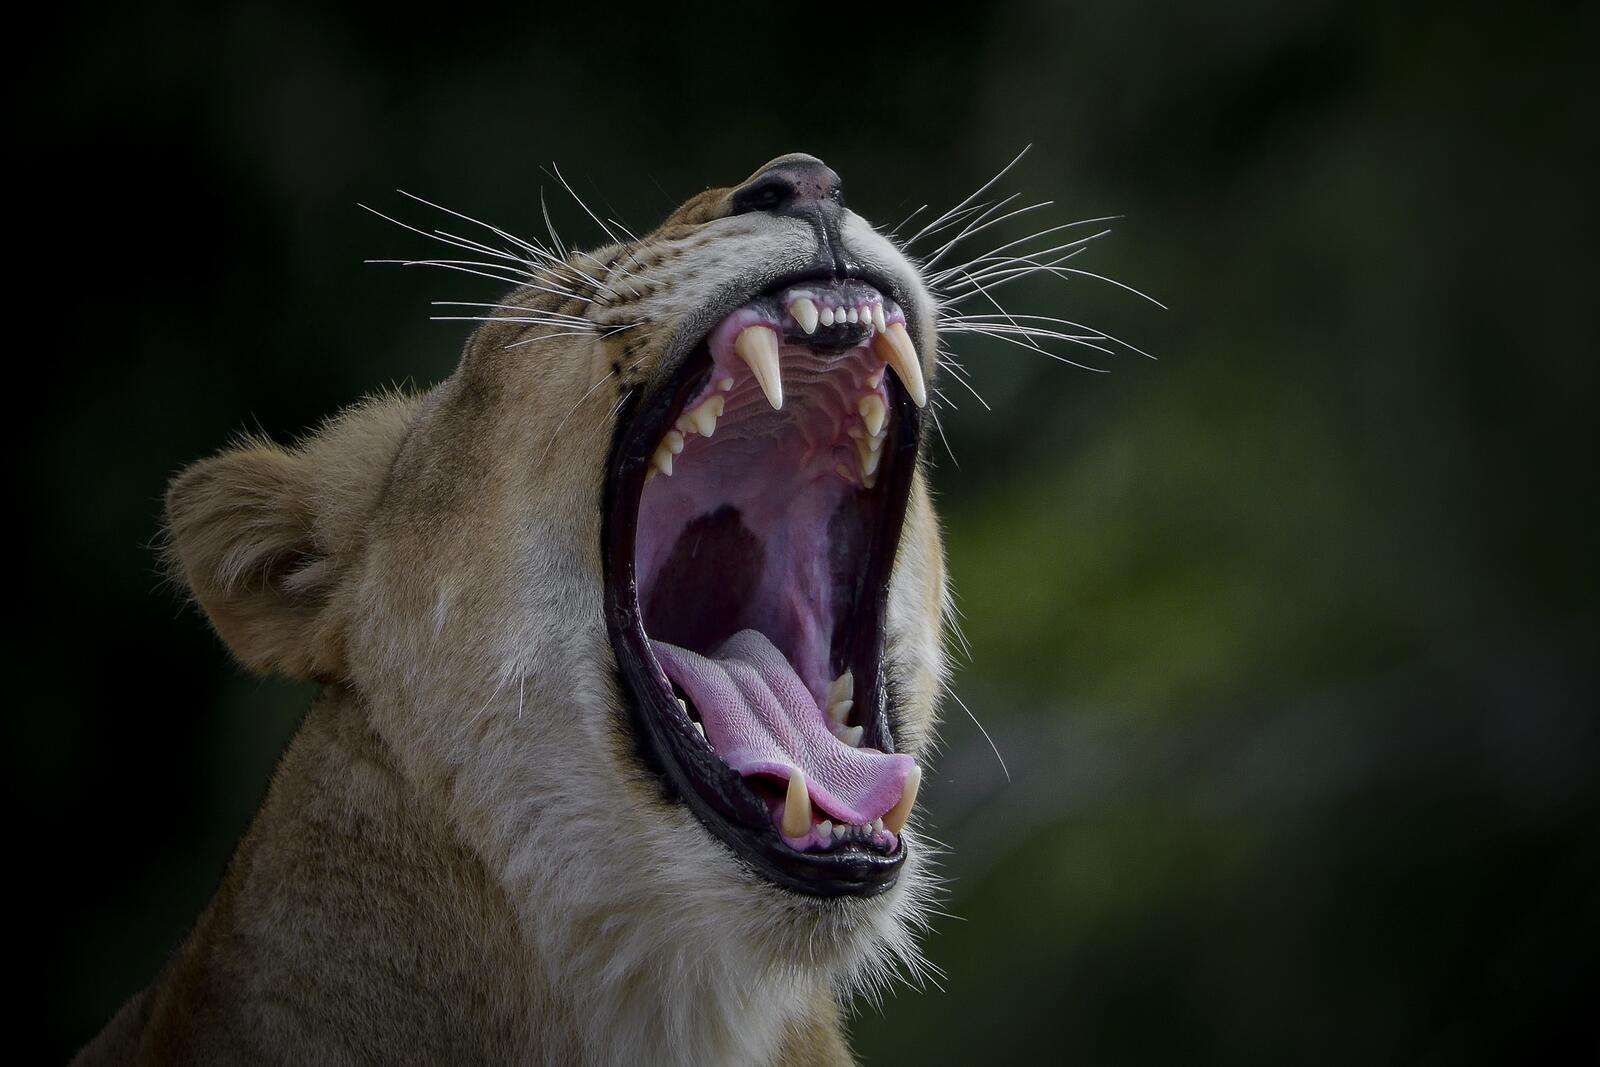 Wallpapers animals yawn predator on the desktop